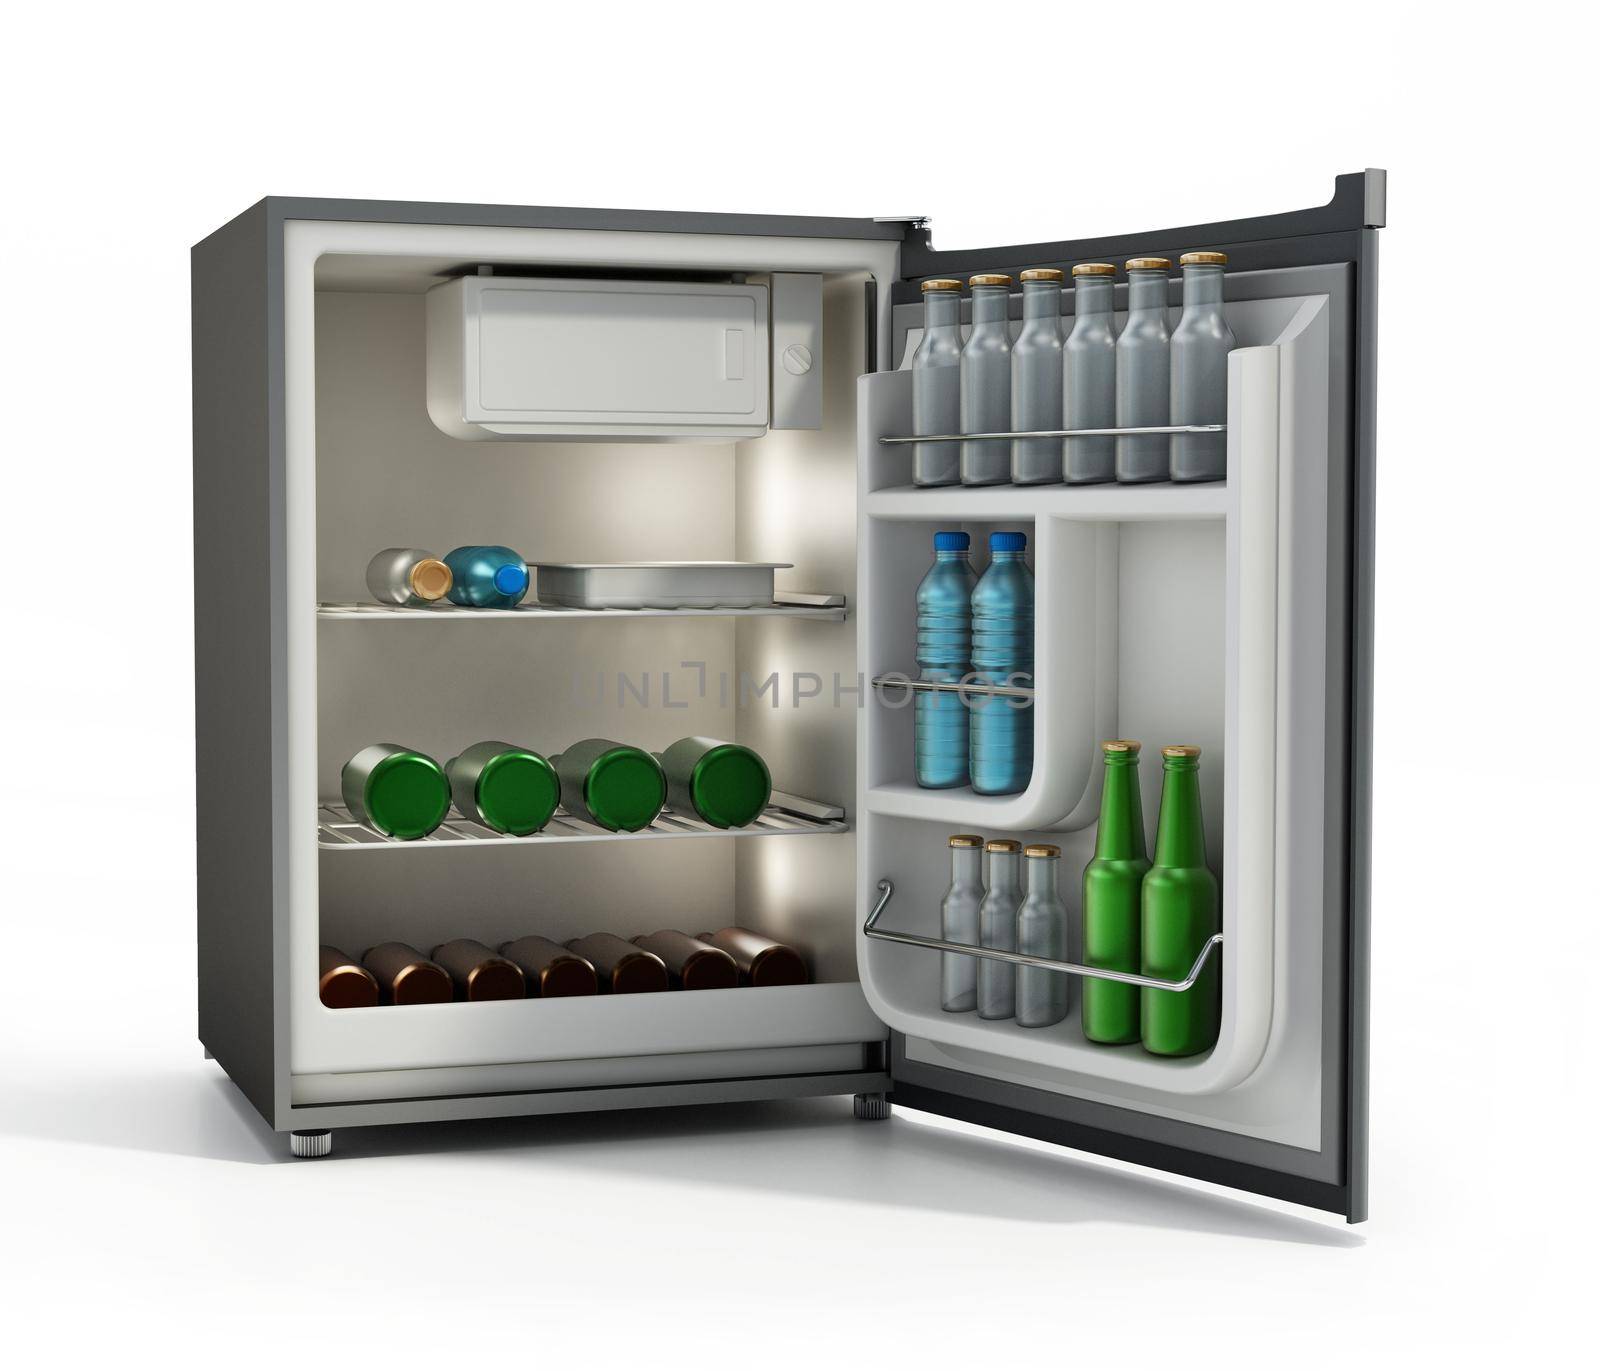 Mini refrigerator full of beverages isolated on white background. 3D illustration.